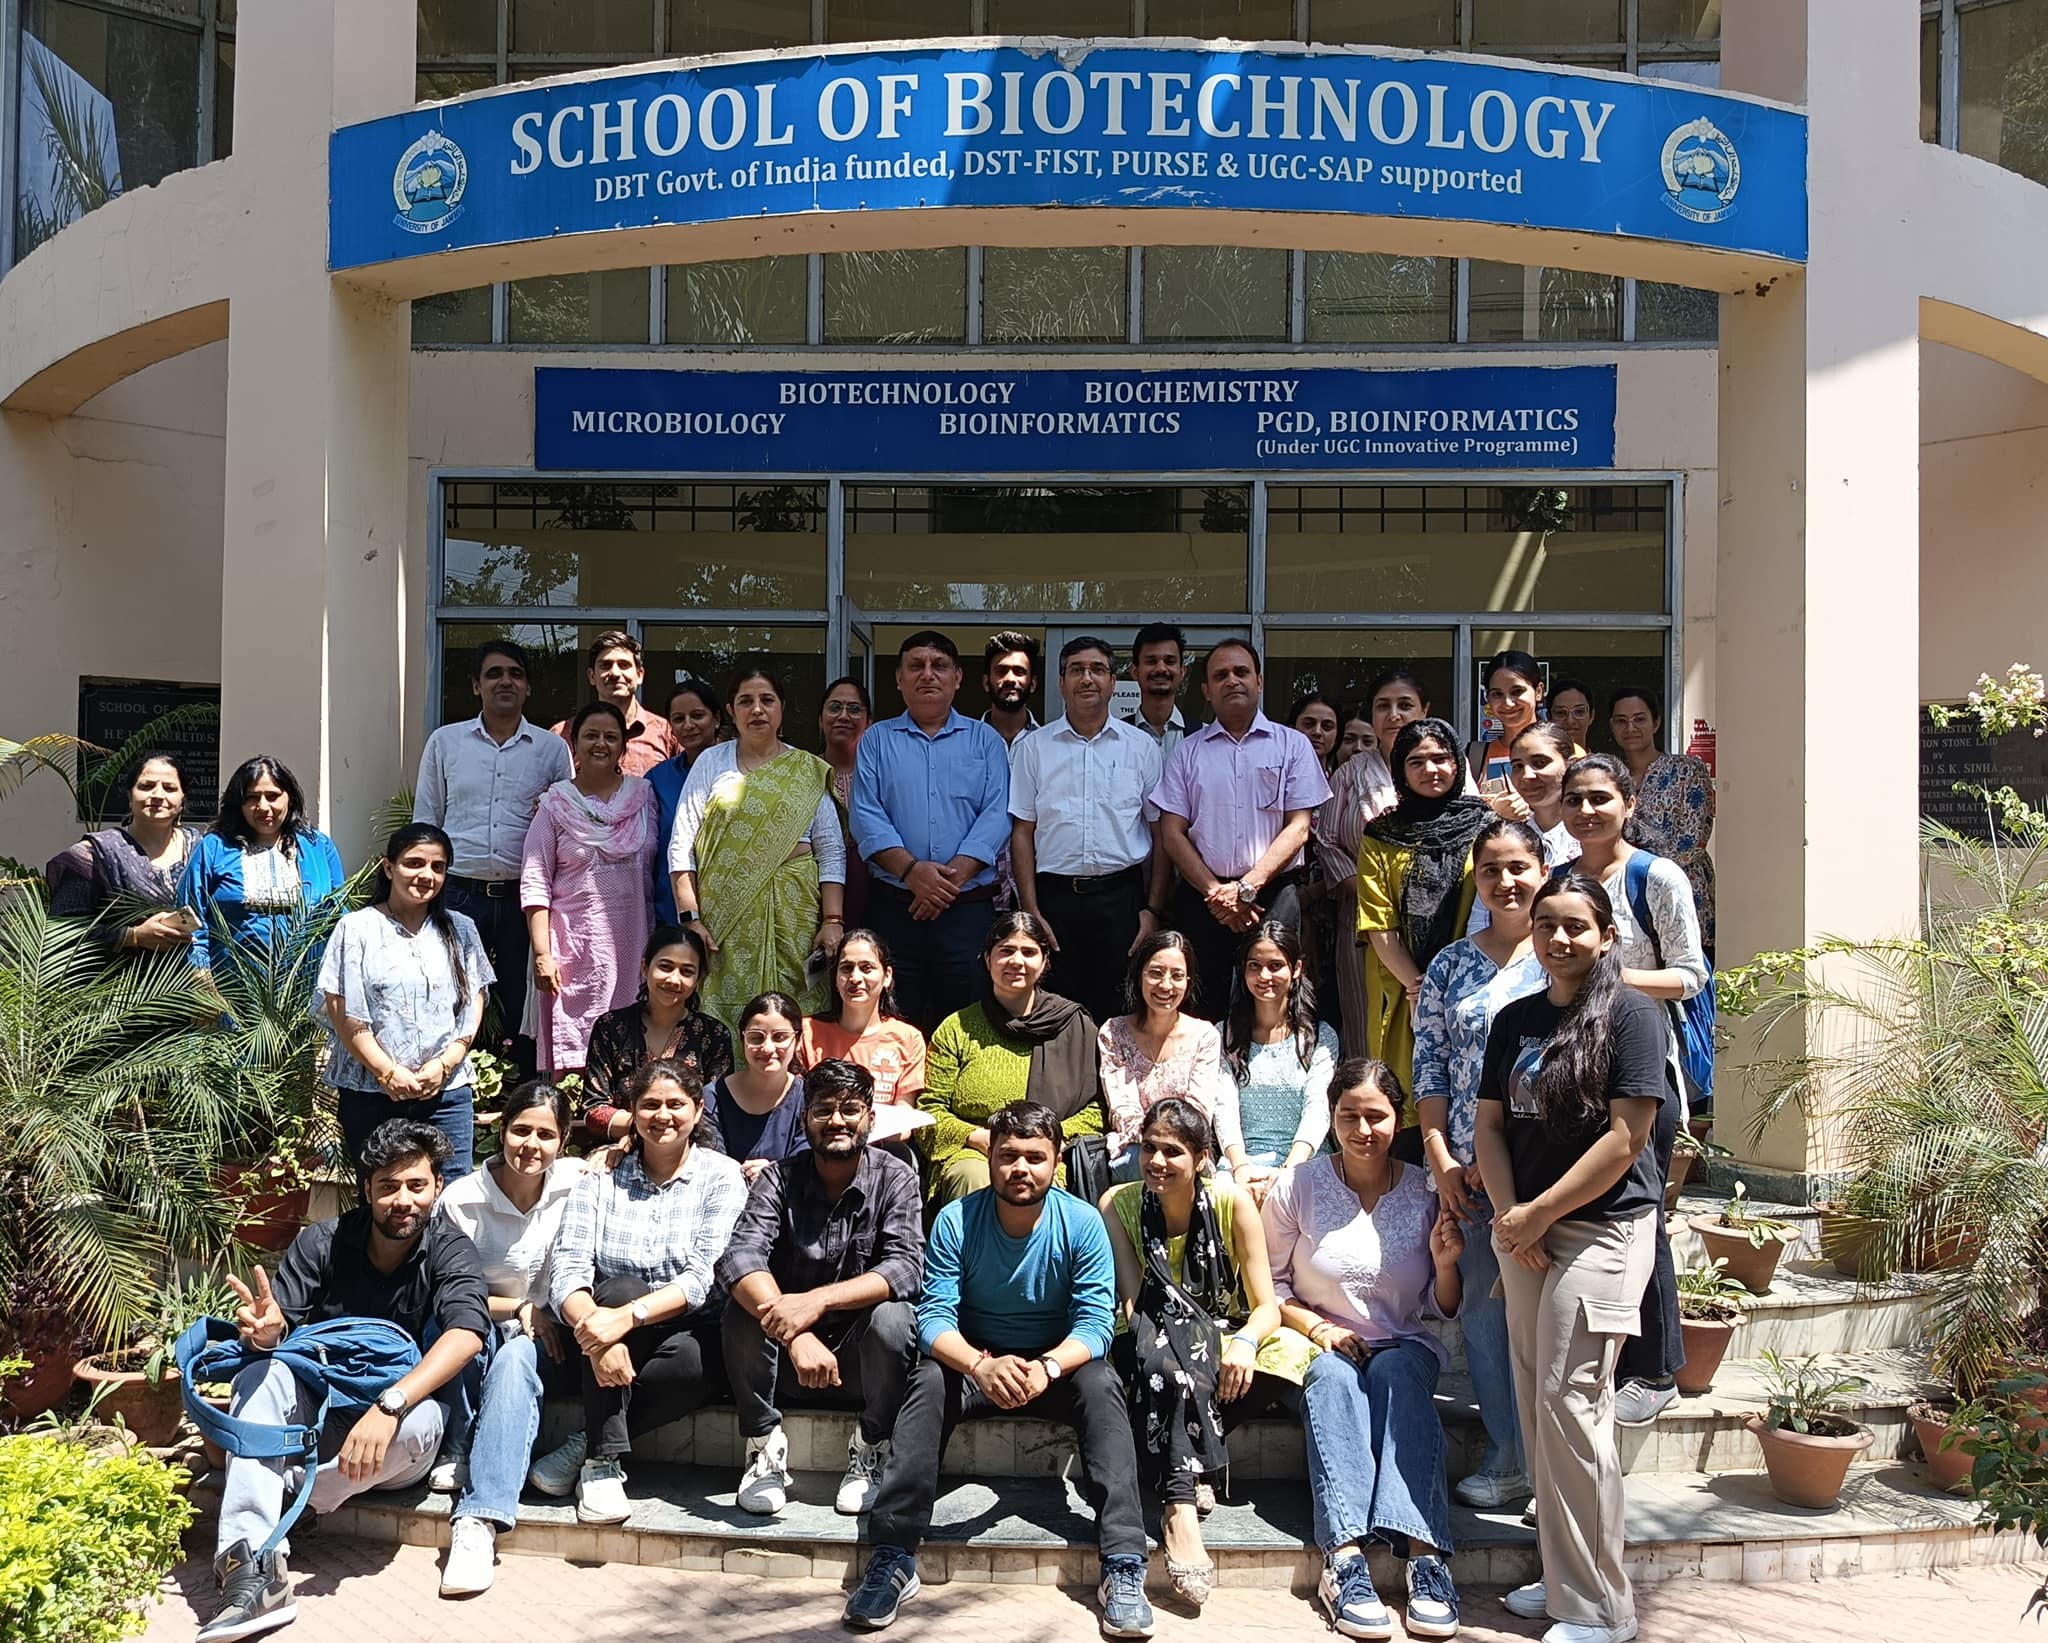 School of Biotechnology